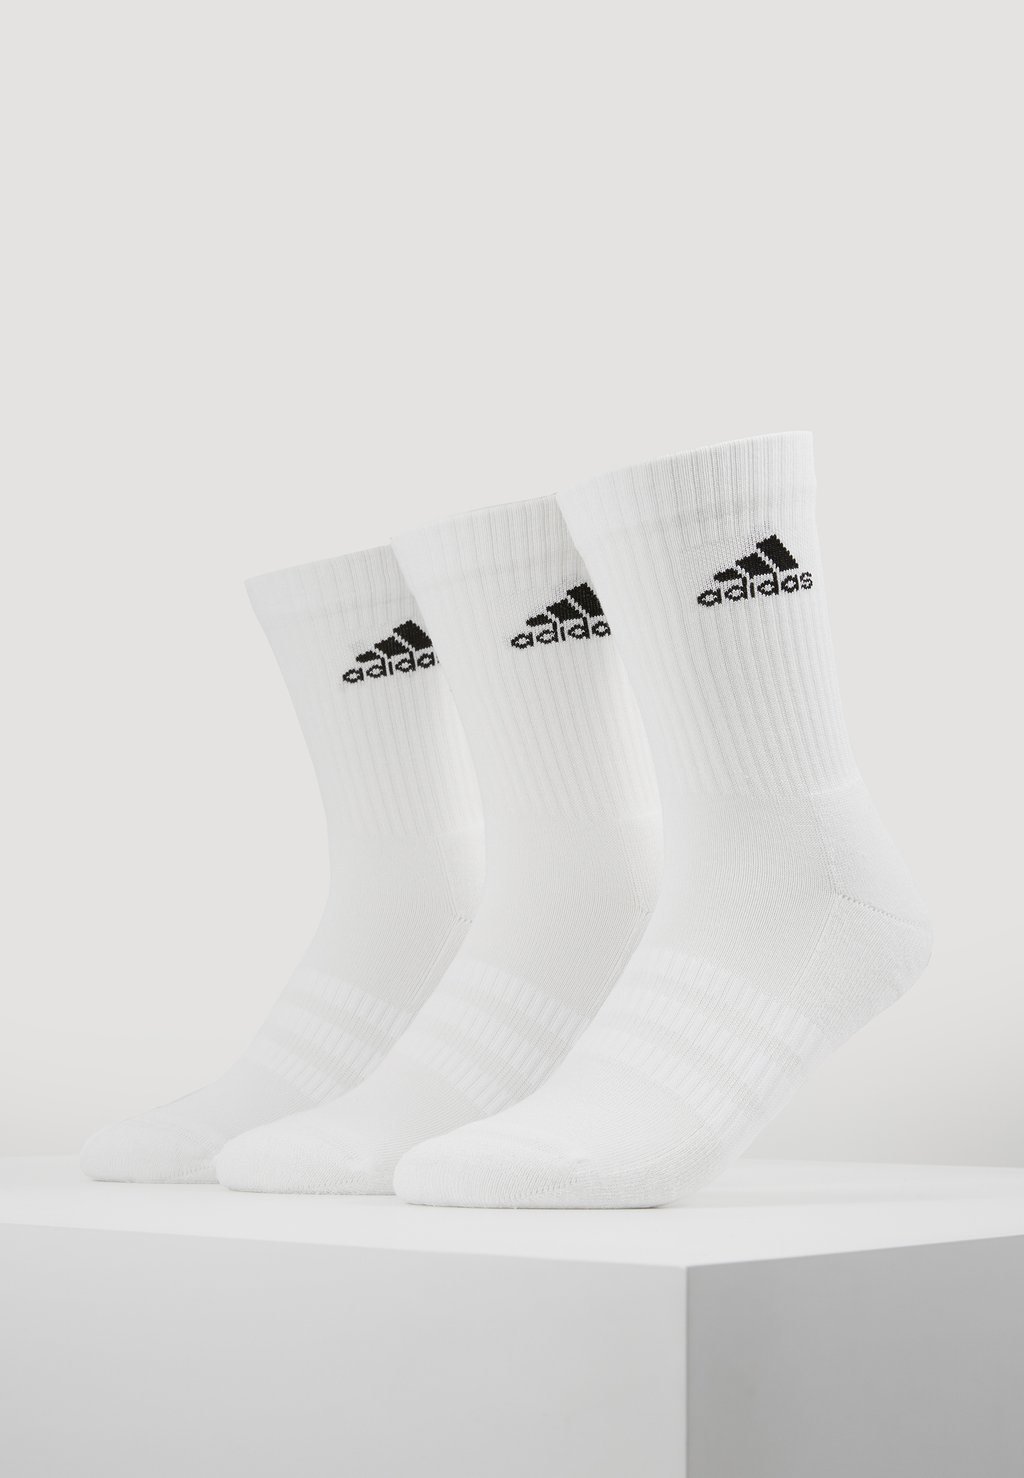 спортивные носки cush sock unisex adidas цвет white black Спортивные носки CUSH 3 PACK UNISEX adidas Performance, цвет white/black